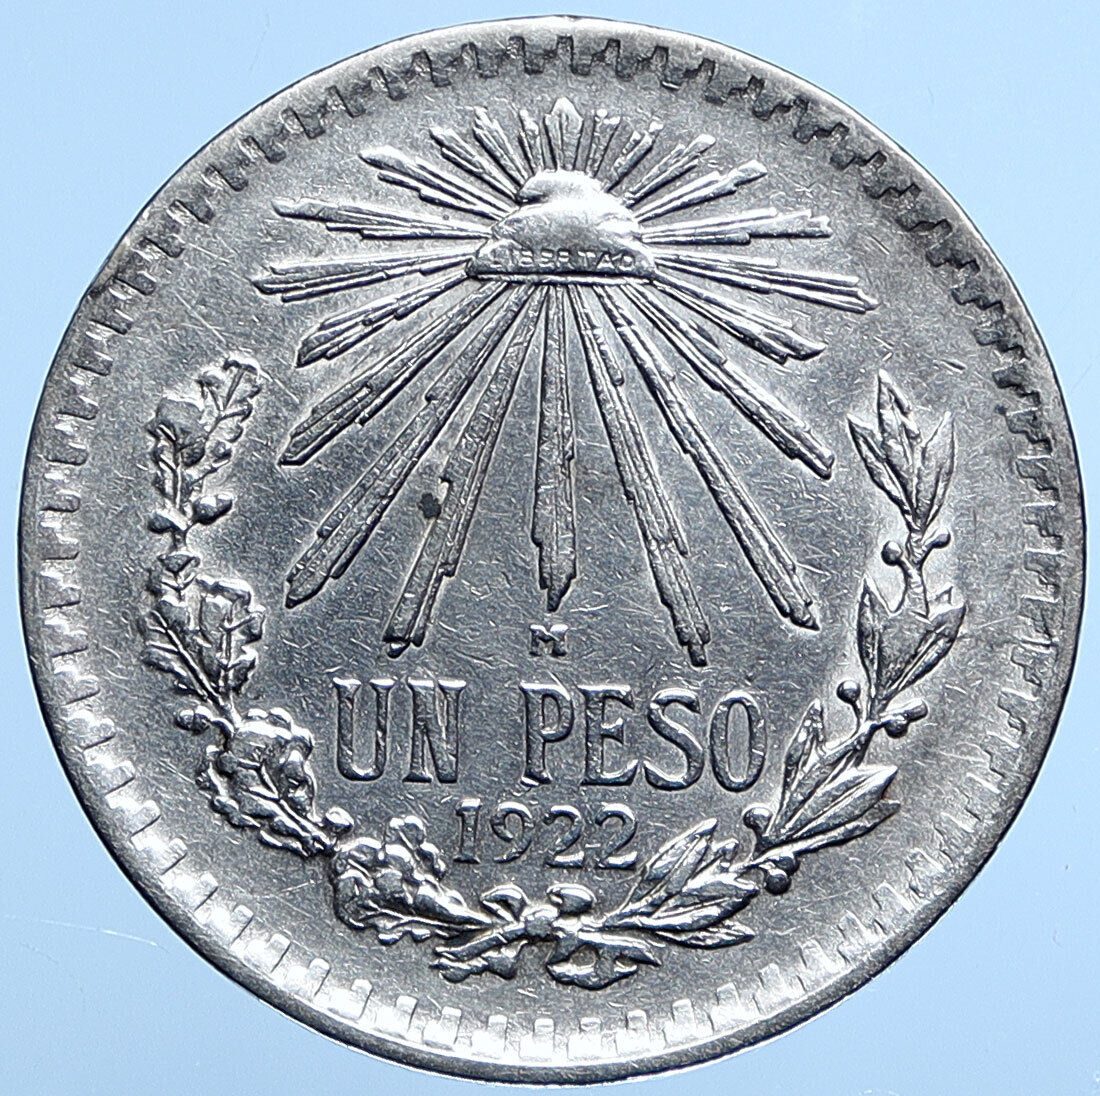 1922 M MEXICO Large Eagle Liberty Cap Mexican Antique Silver 1 Peso Coin i115006